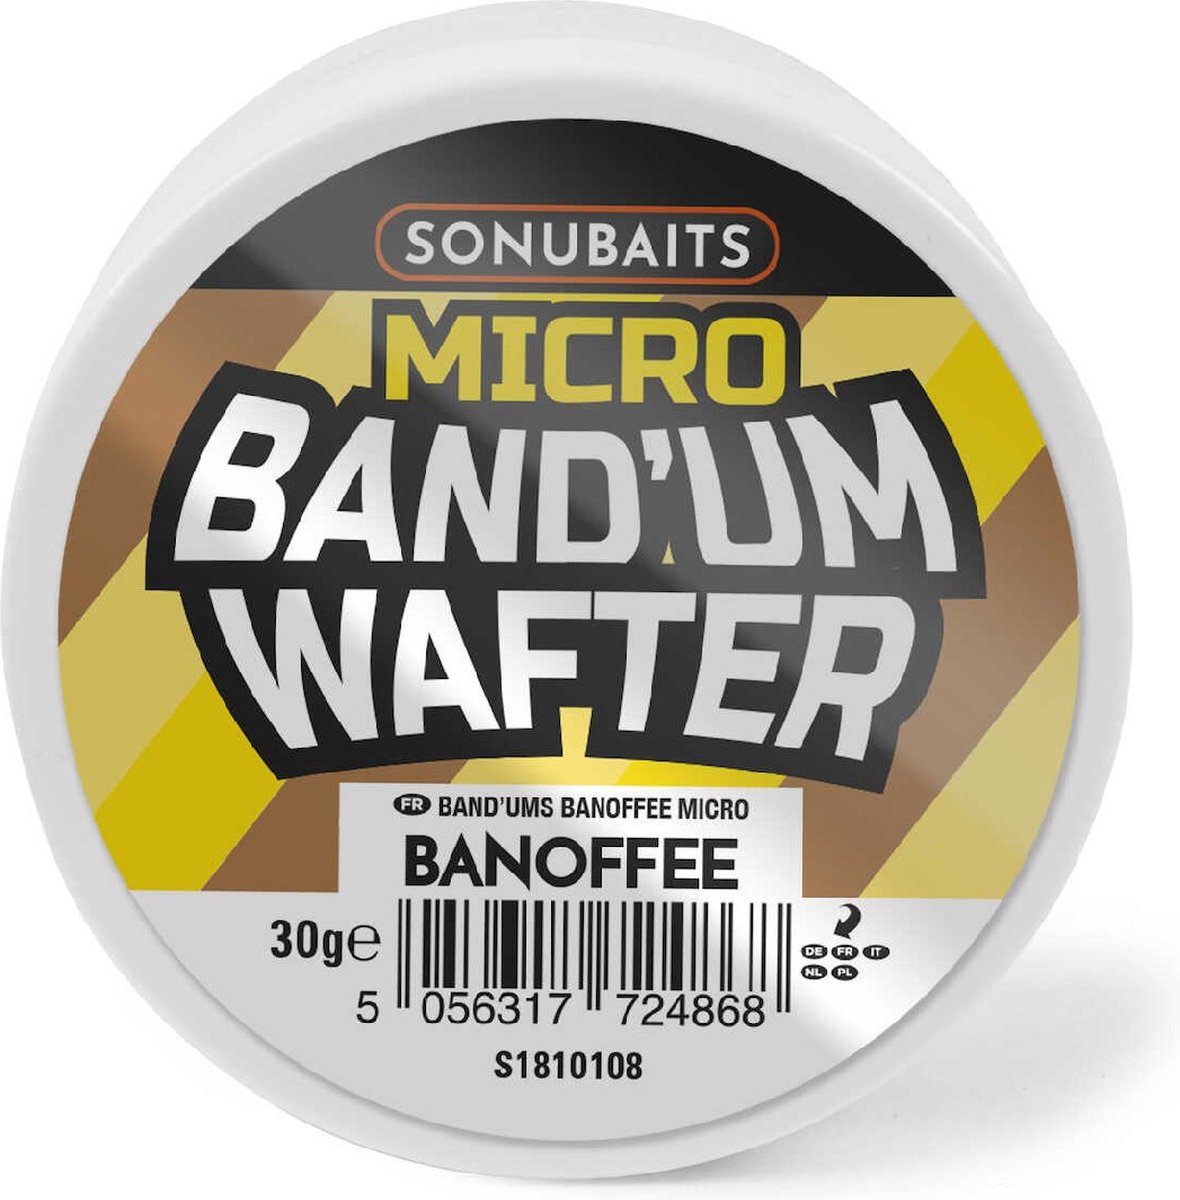 Sonubaits Micro Band’um Wafter 30gr - Smaak : Banoffee